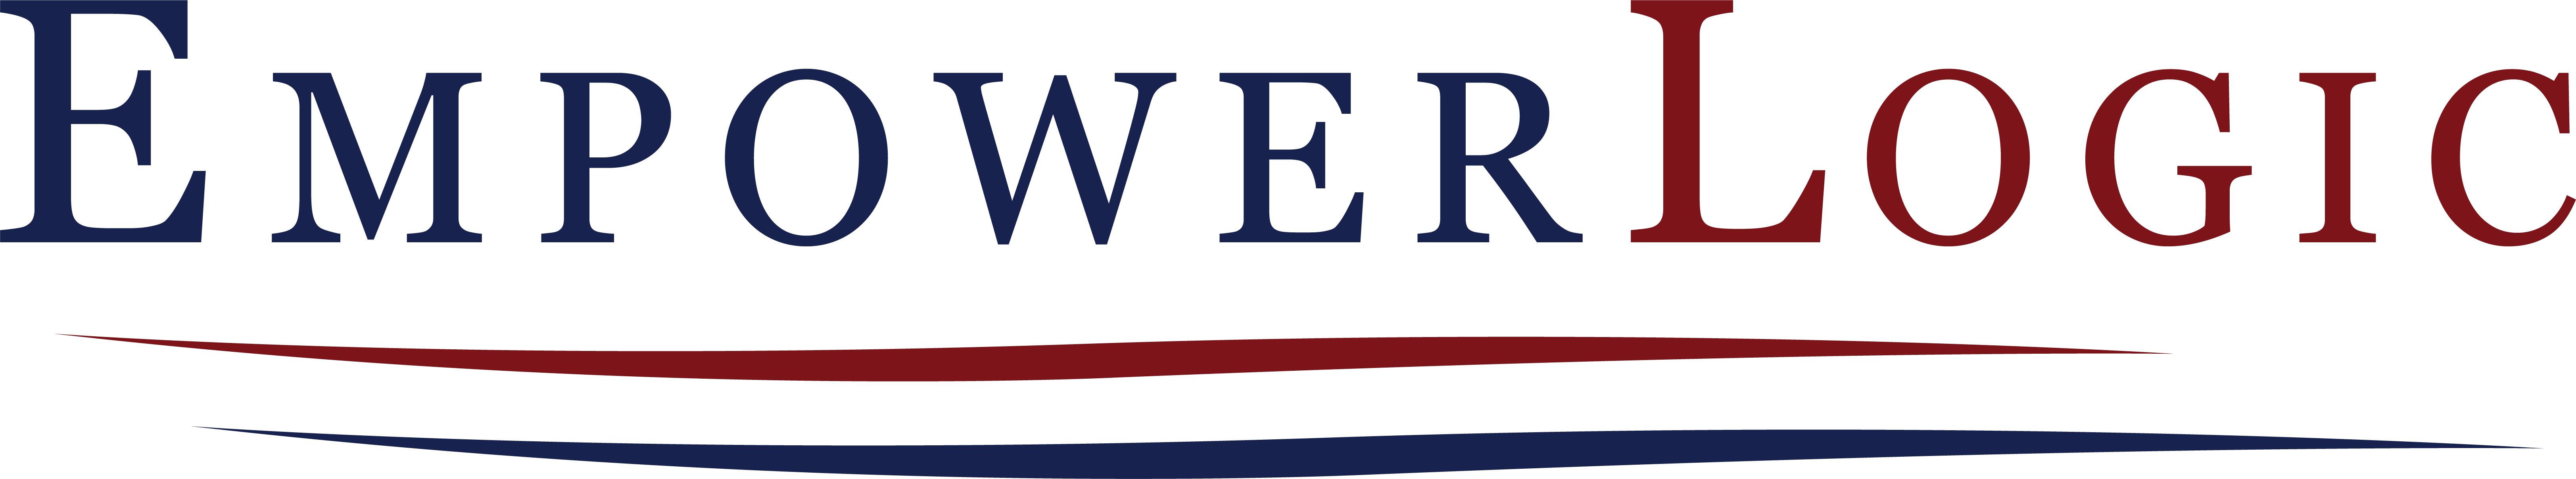 Final Empower Logic Logo